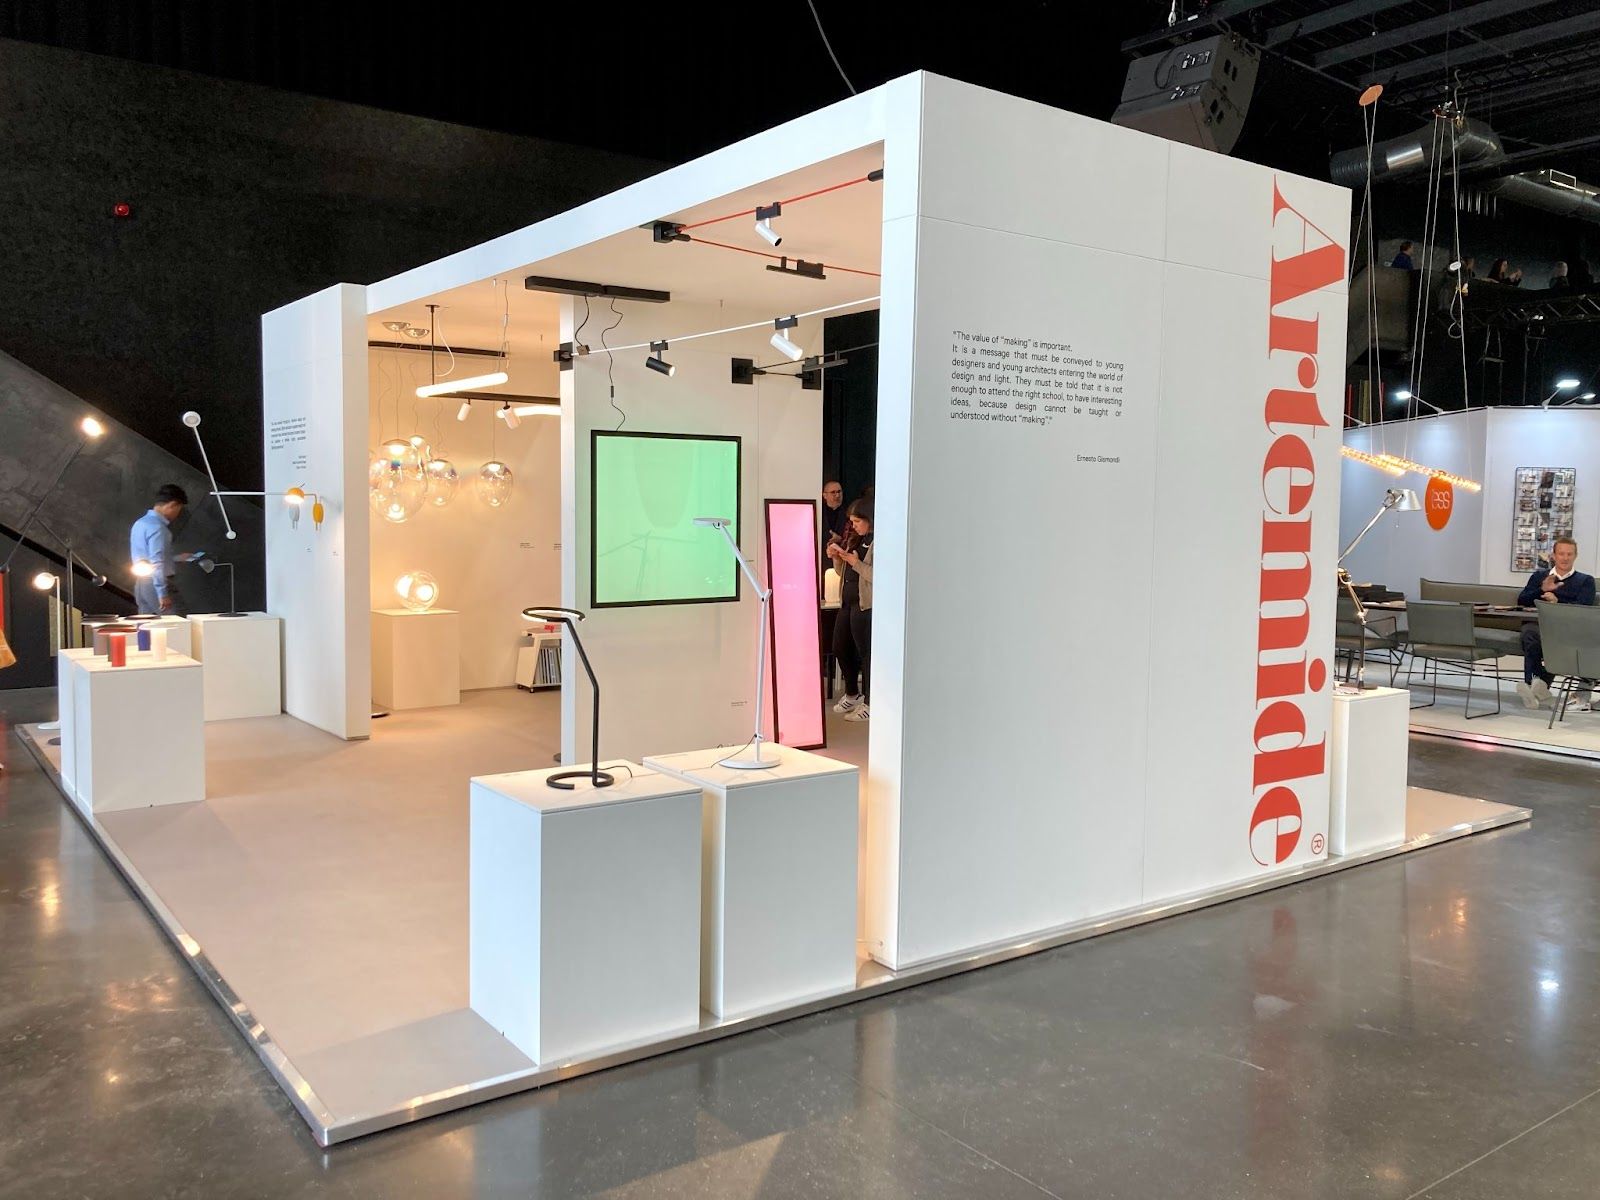 Artemide's booth at Design London